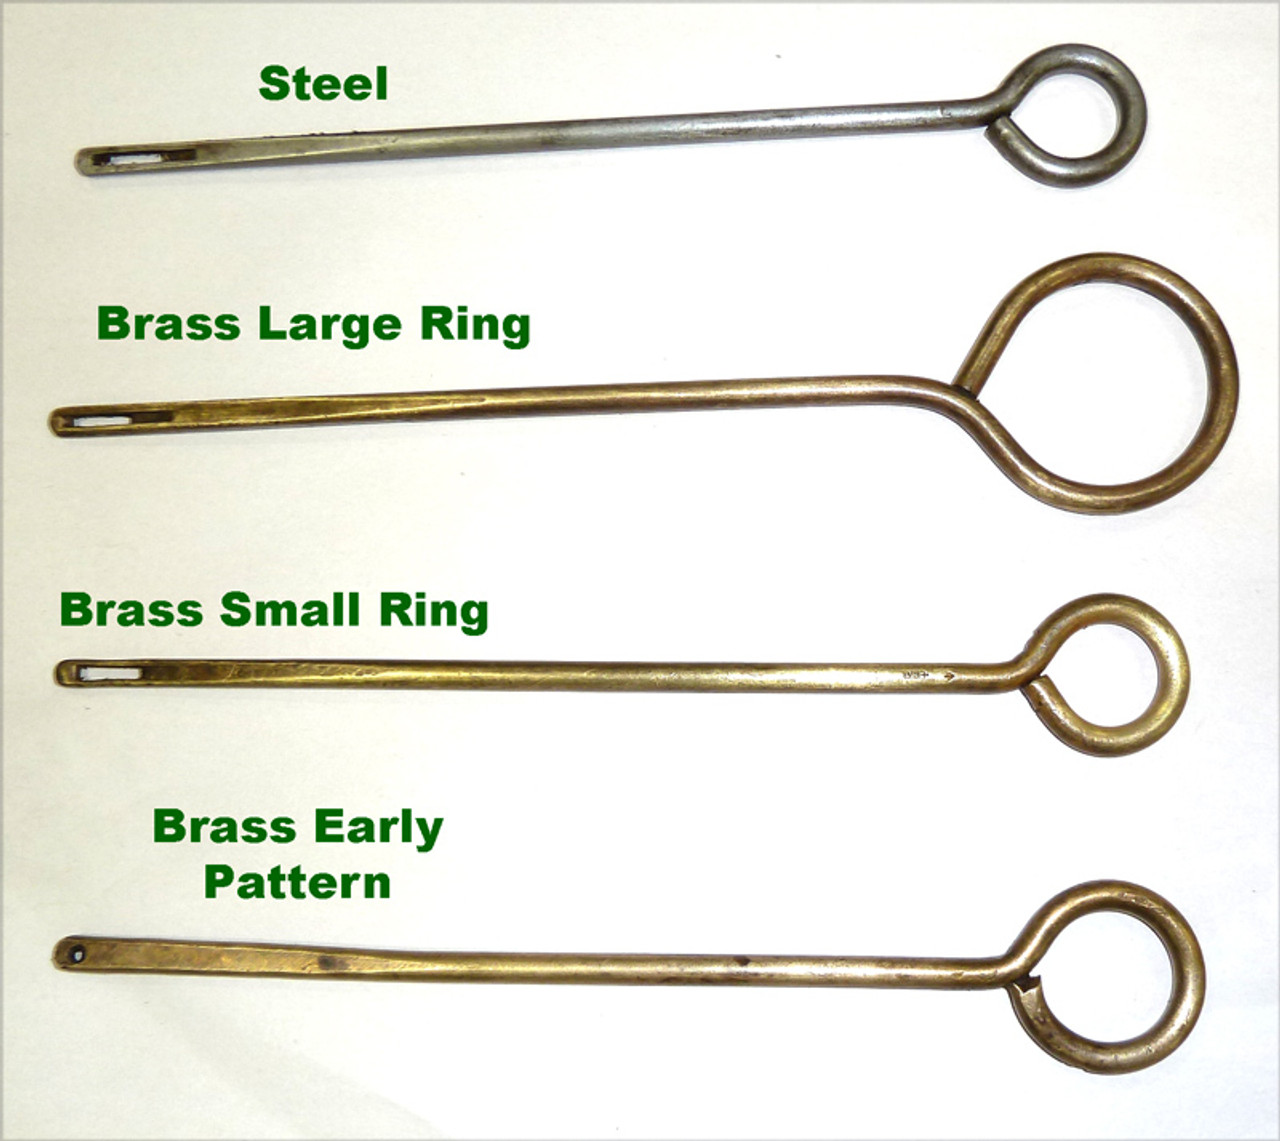 Webley Pistol Cleaning Rod (Brass Large Ring)